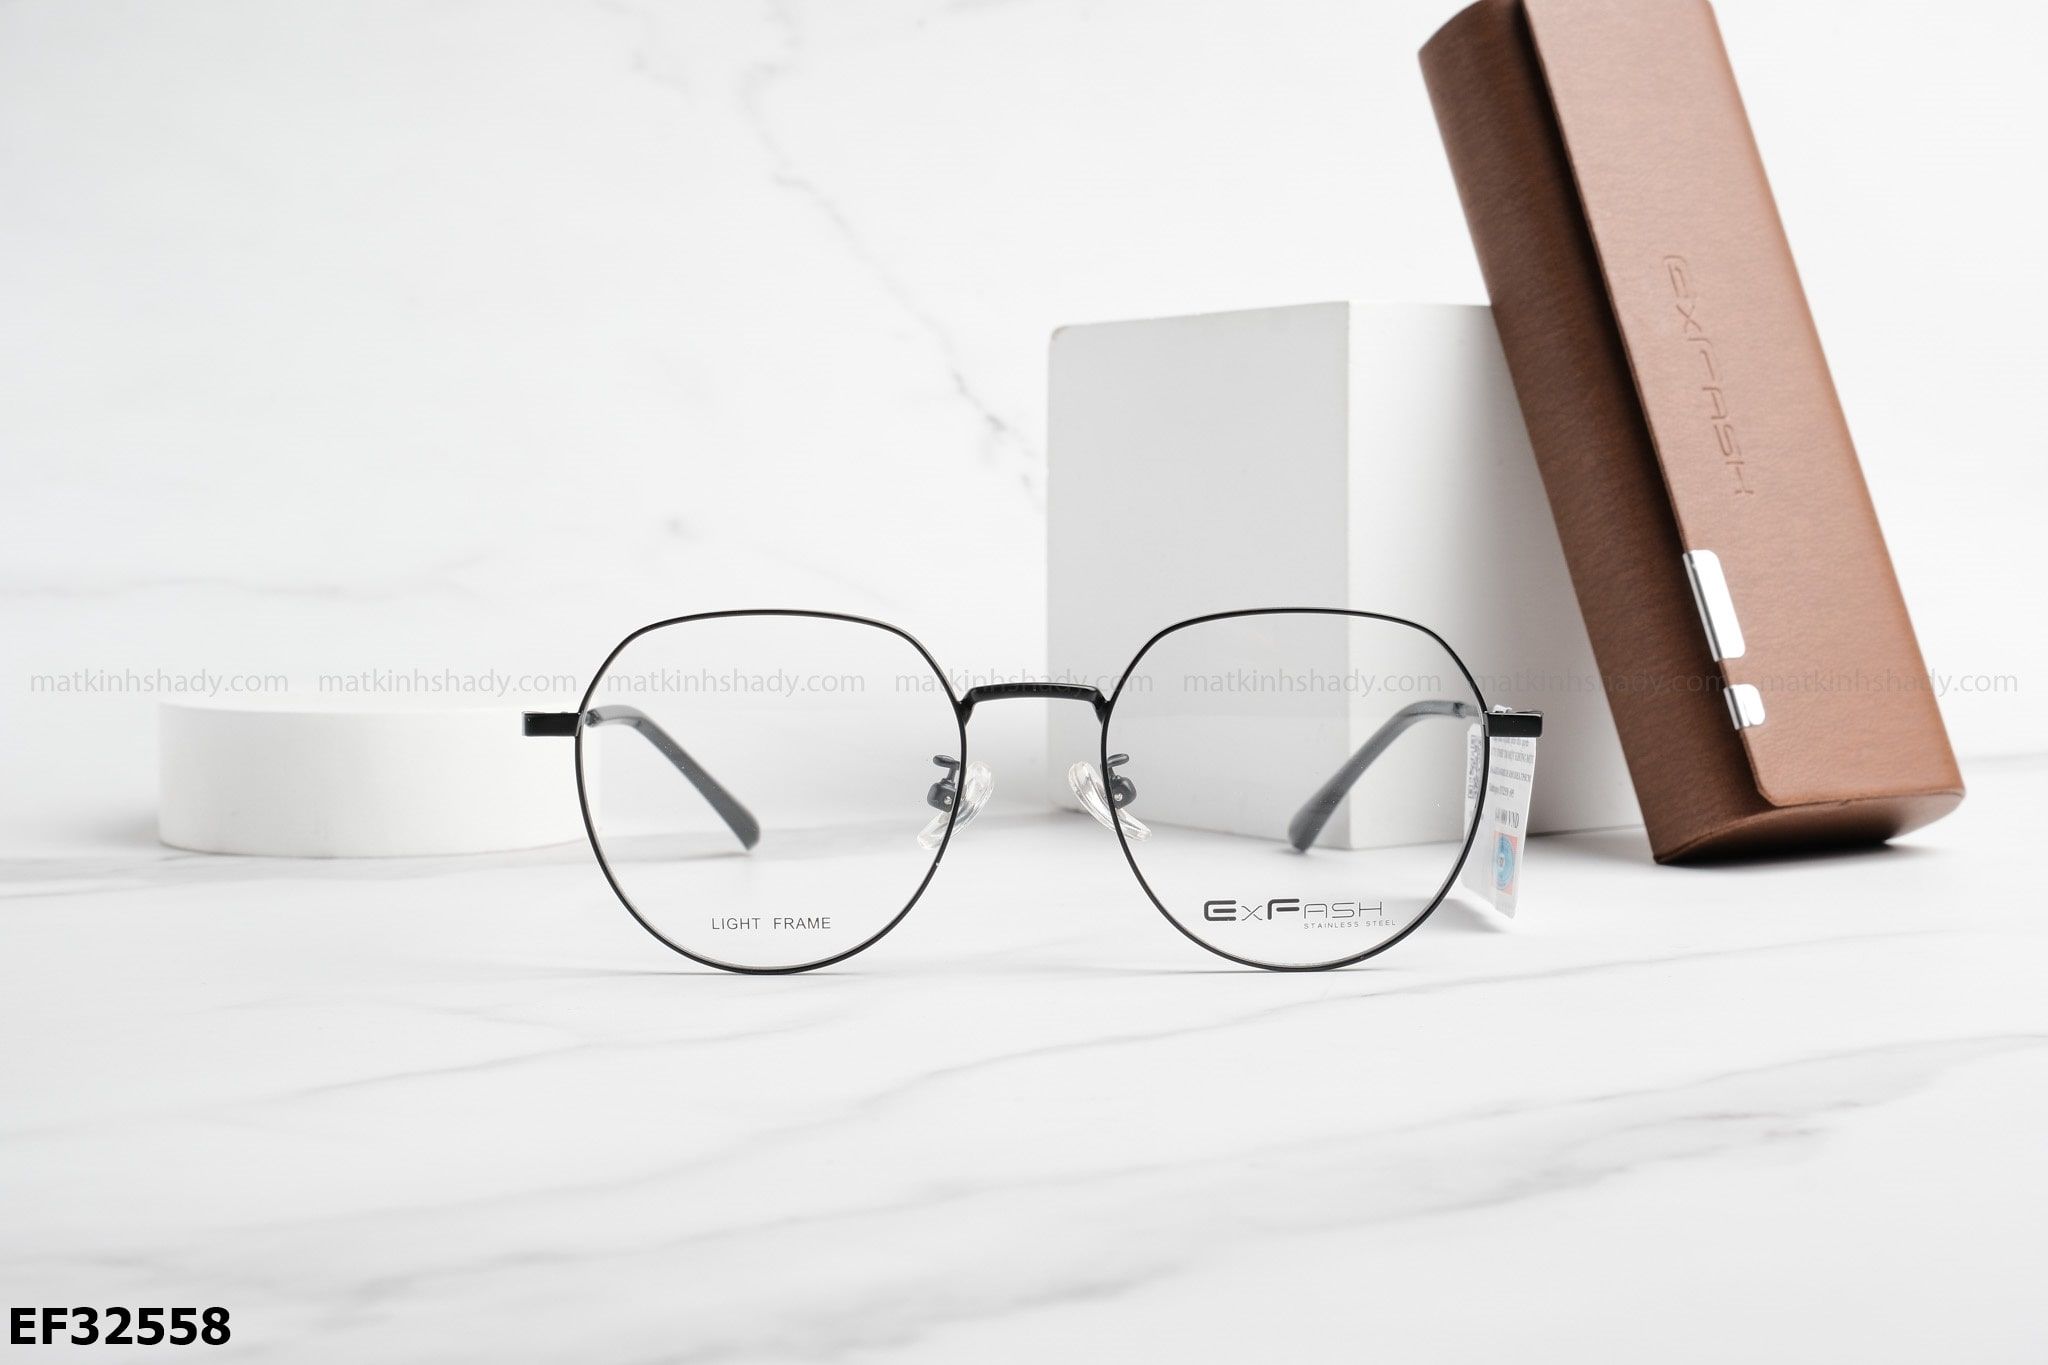  Exfash Eyewear - Glasses - EF32558 